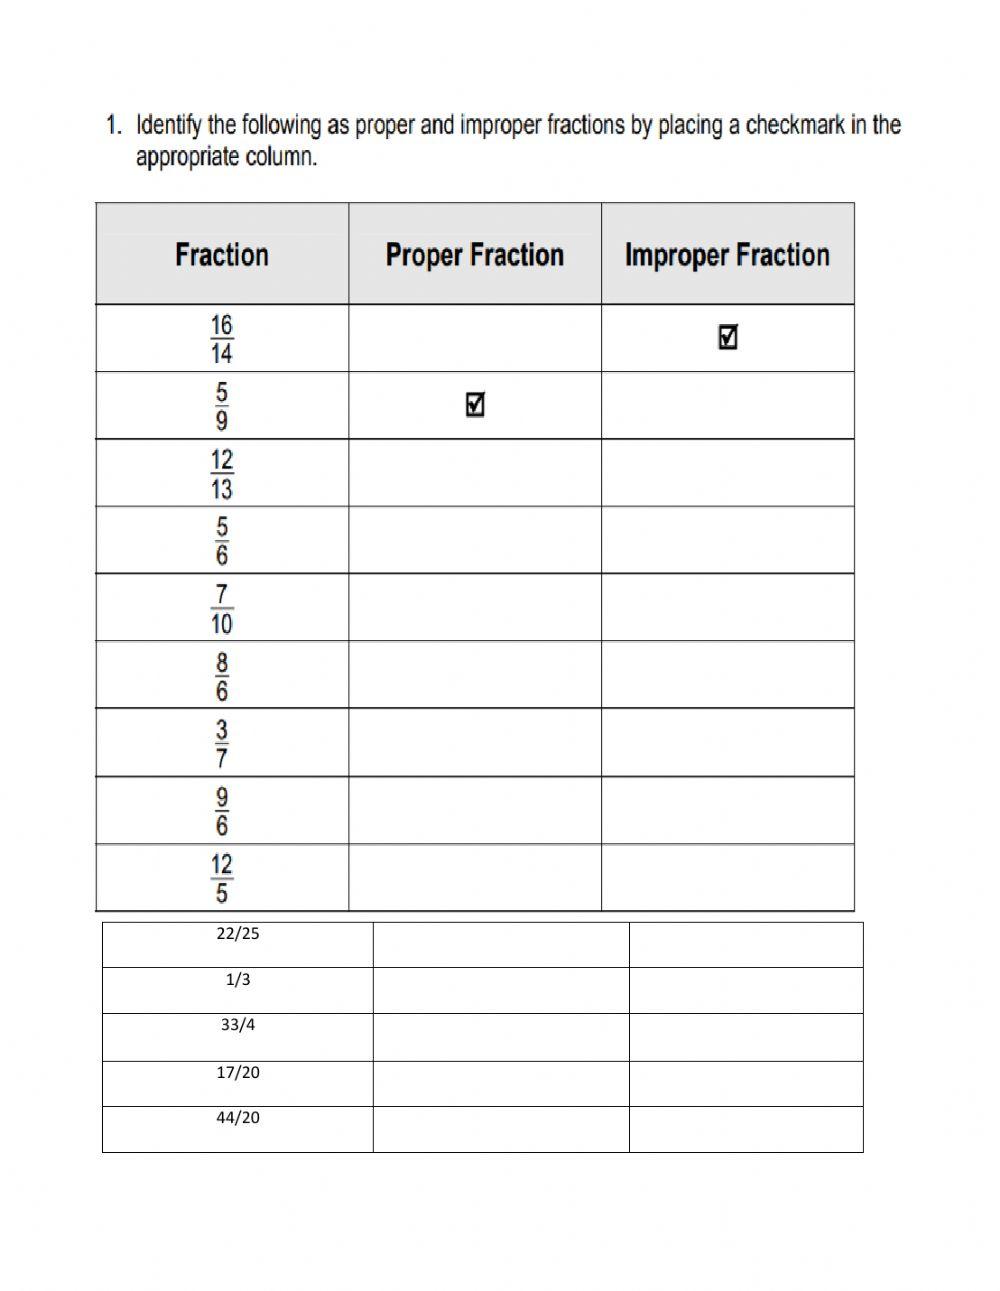 Identifying types of fraction